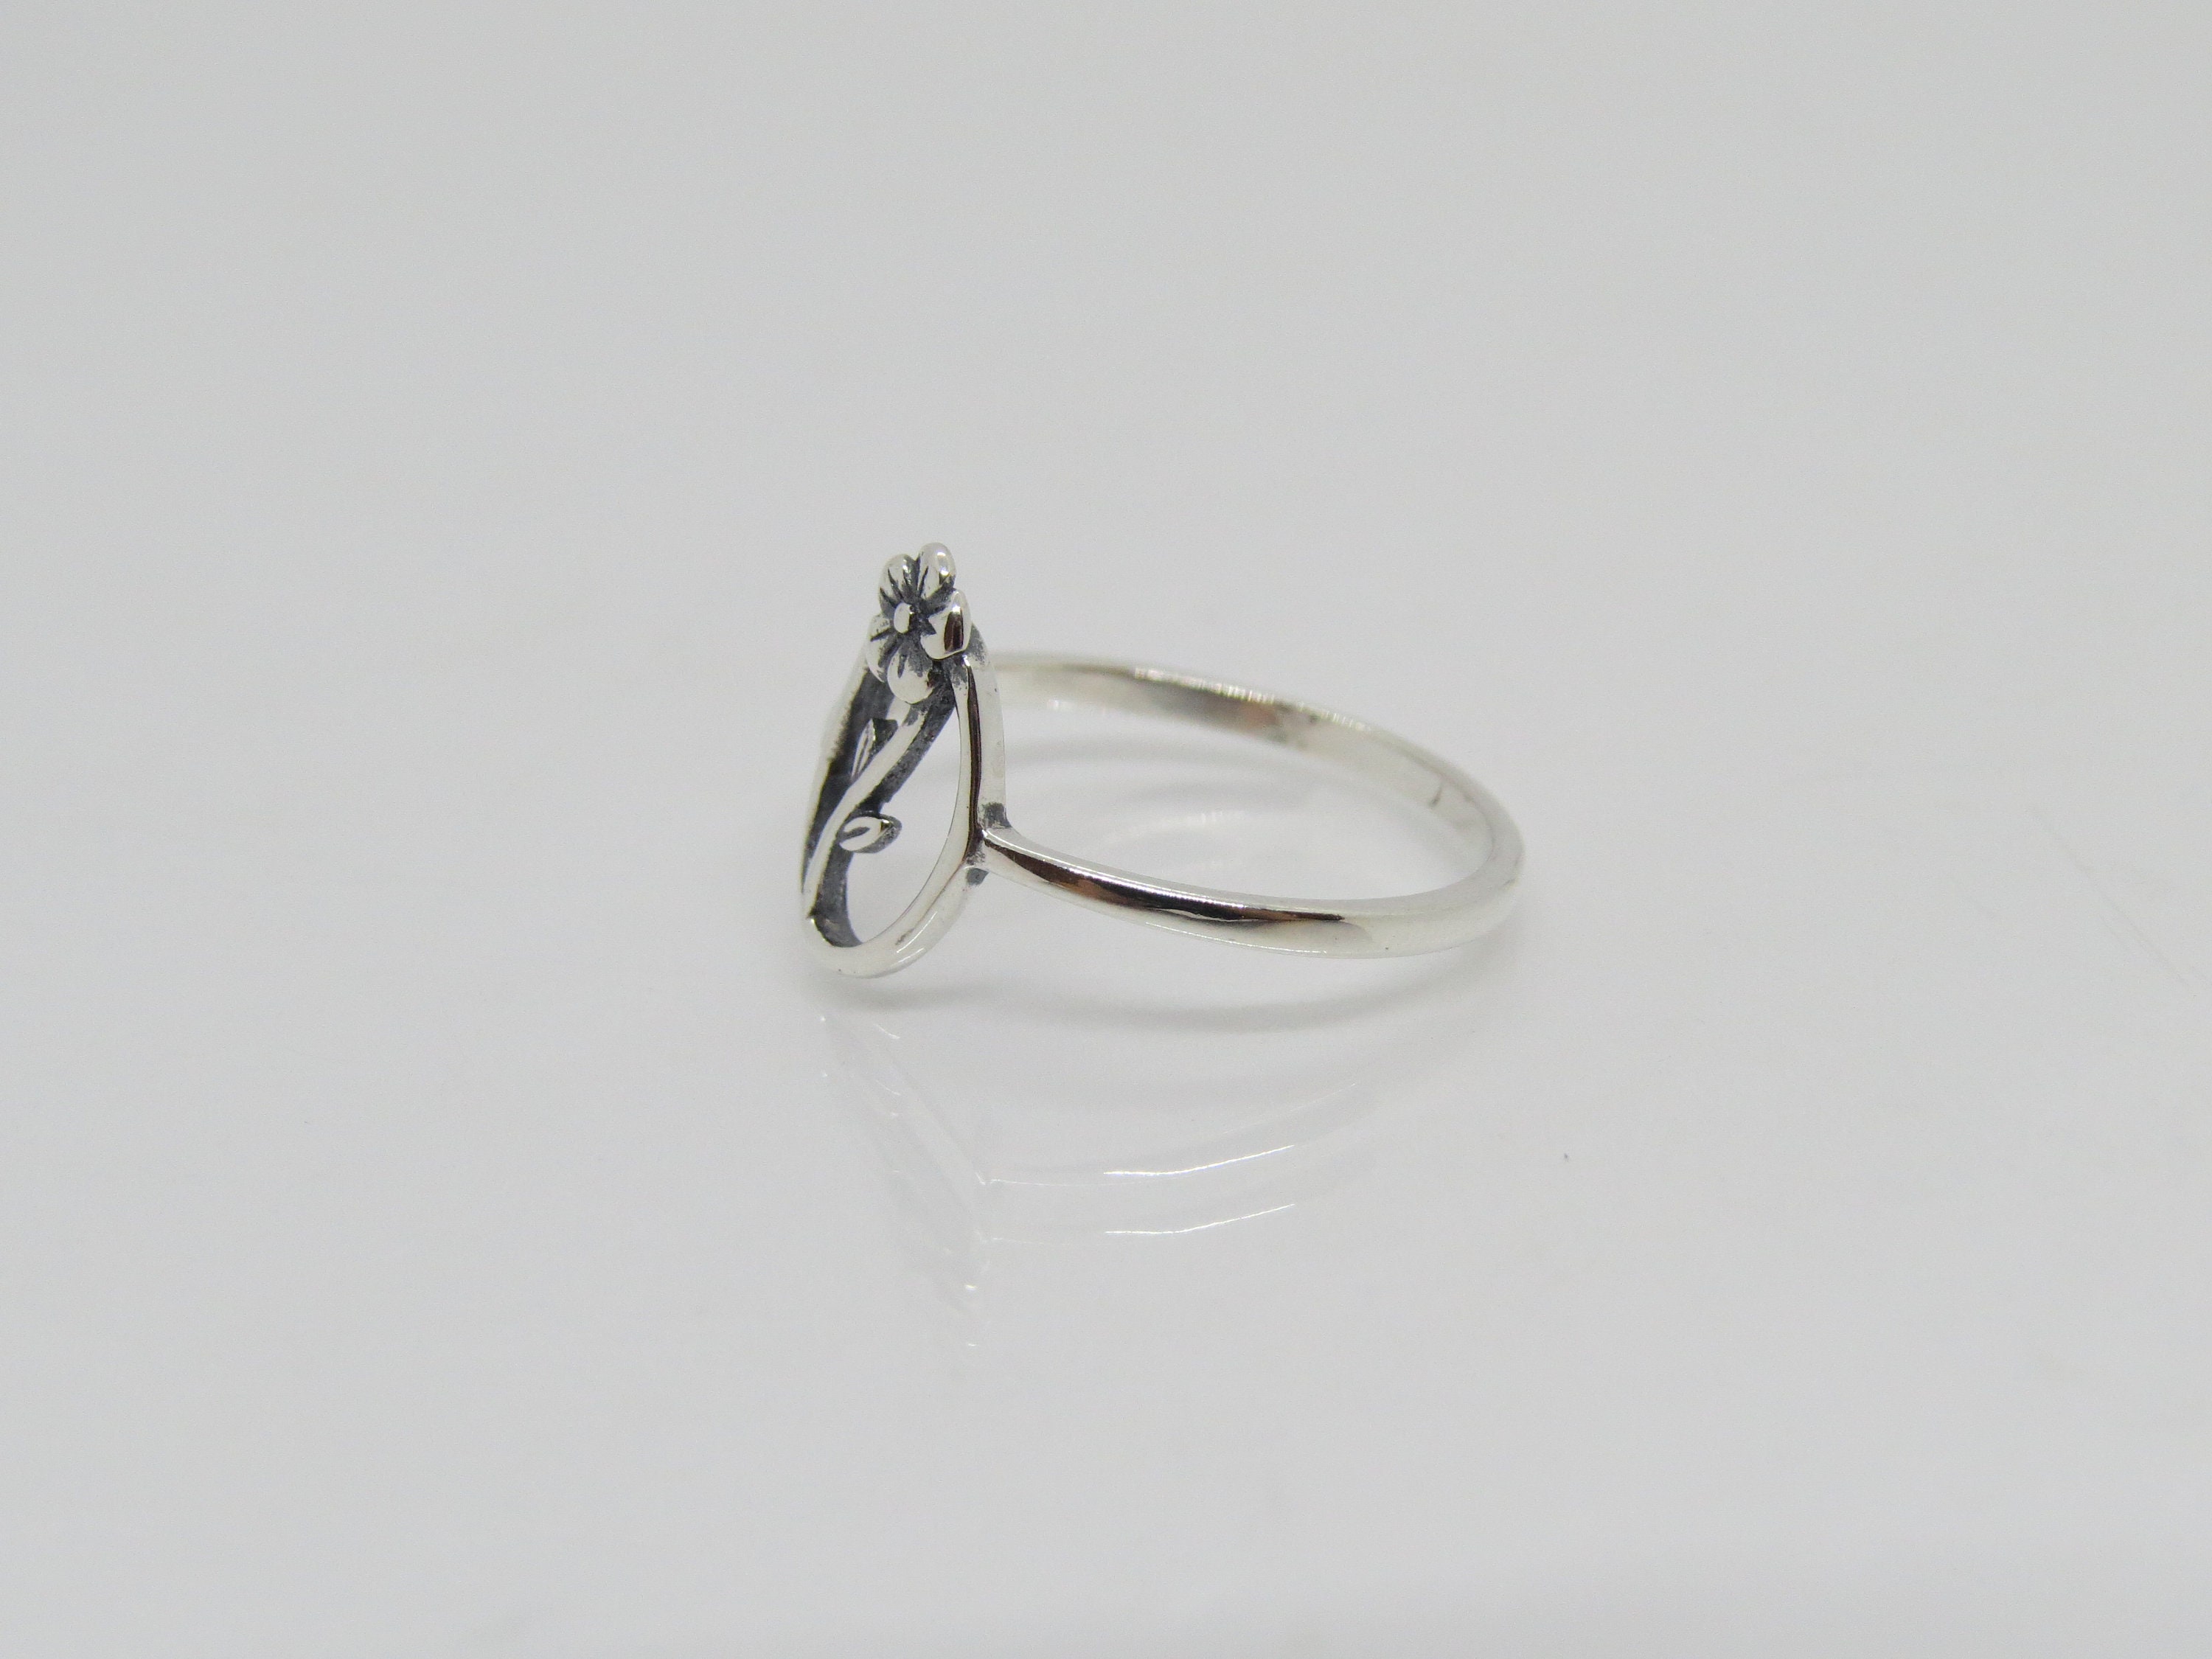 Vintage Sterling Silver Flower Ring Size 7 - Etsy